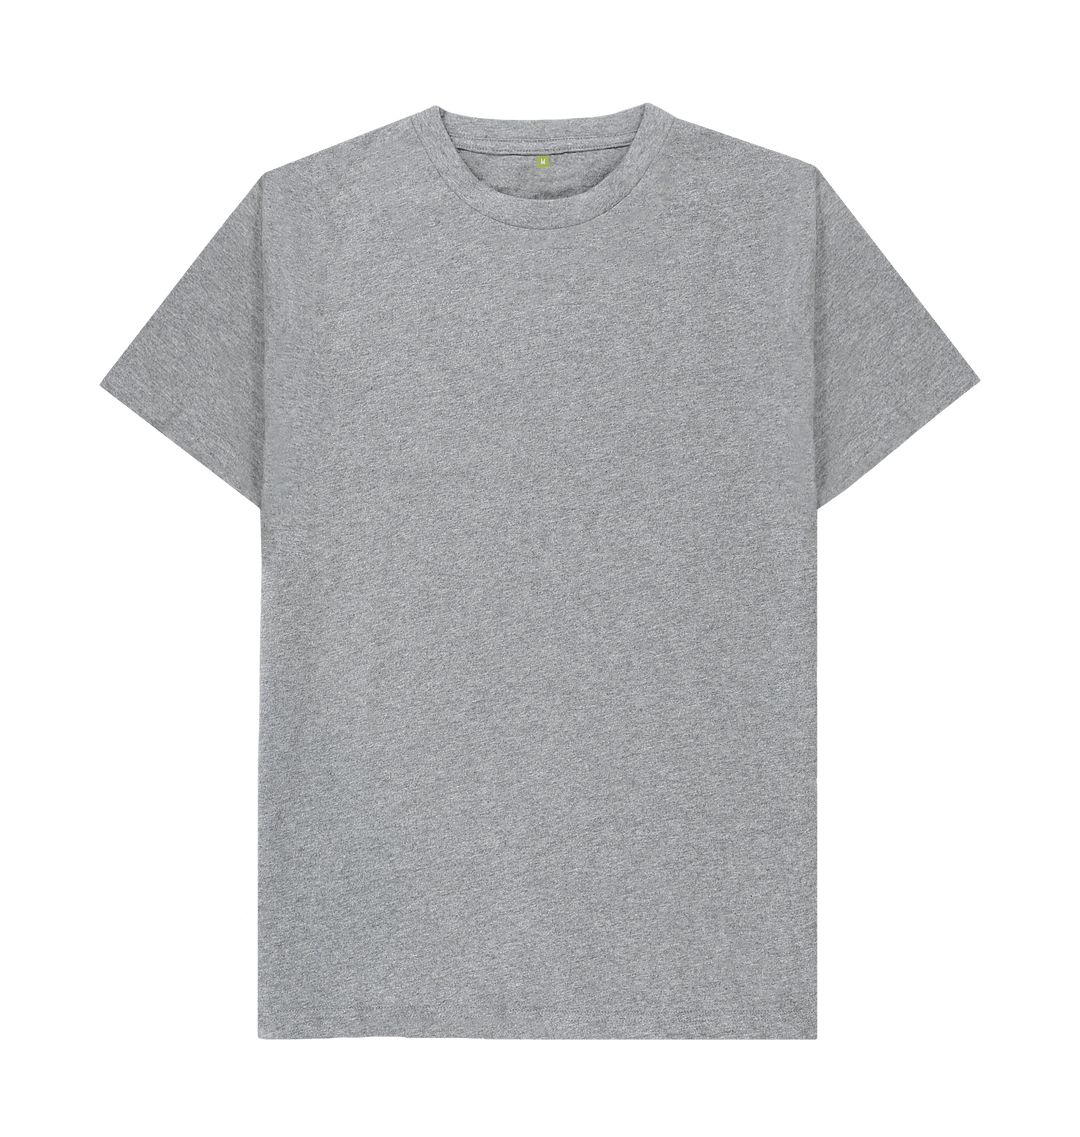 Athletic Grey Men's organic cotton t-shirt